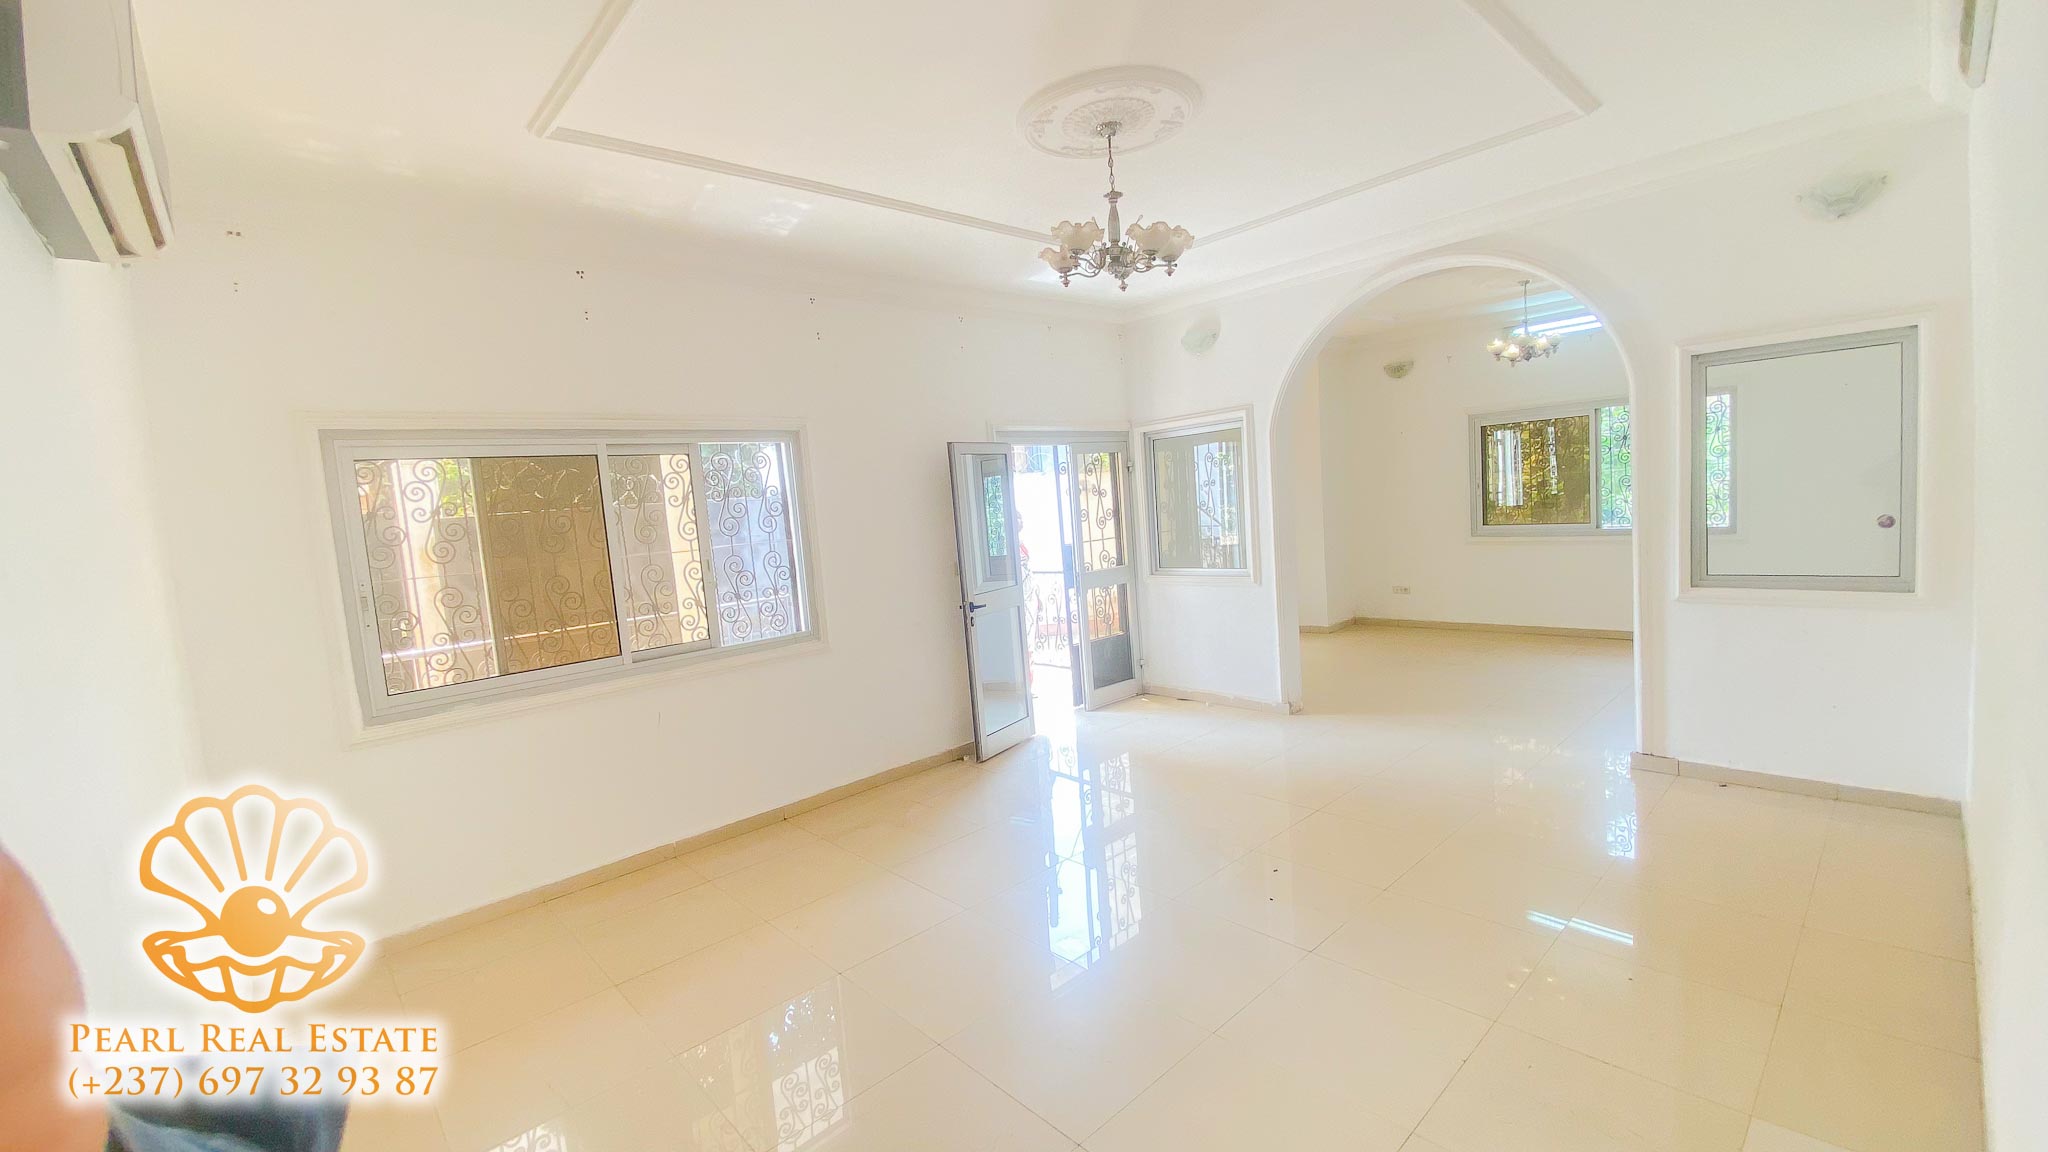 House (Villa) to rent - Yaoundé, Bastos, Golf - 1 living room(s), 4 bedroom(s), 3 bathroom(s) - 1 500 000 FCFA / month